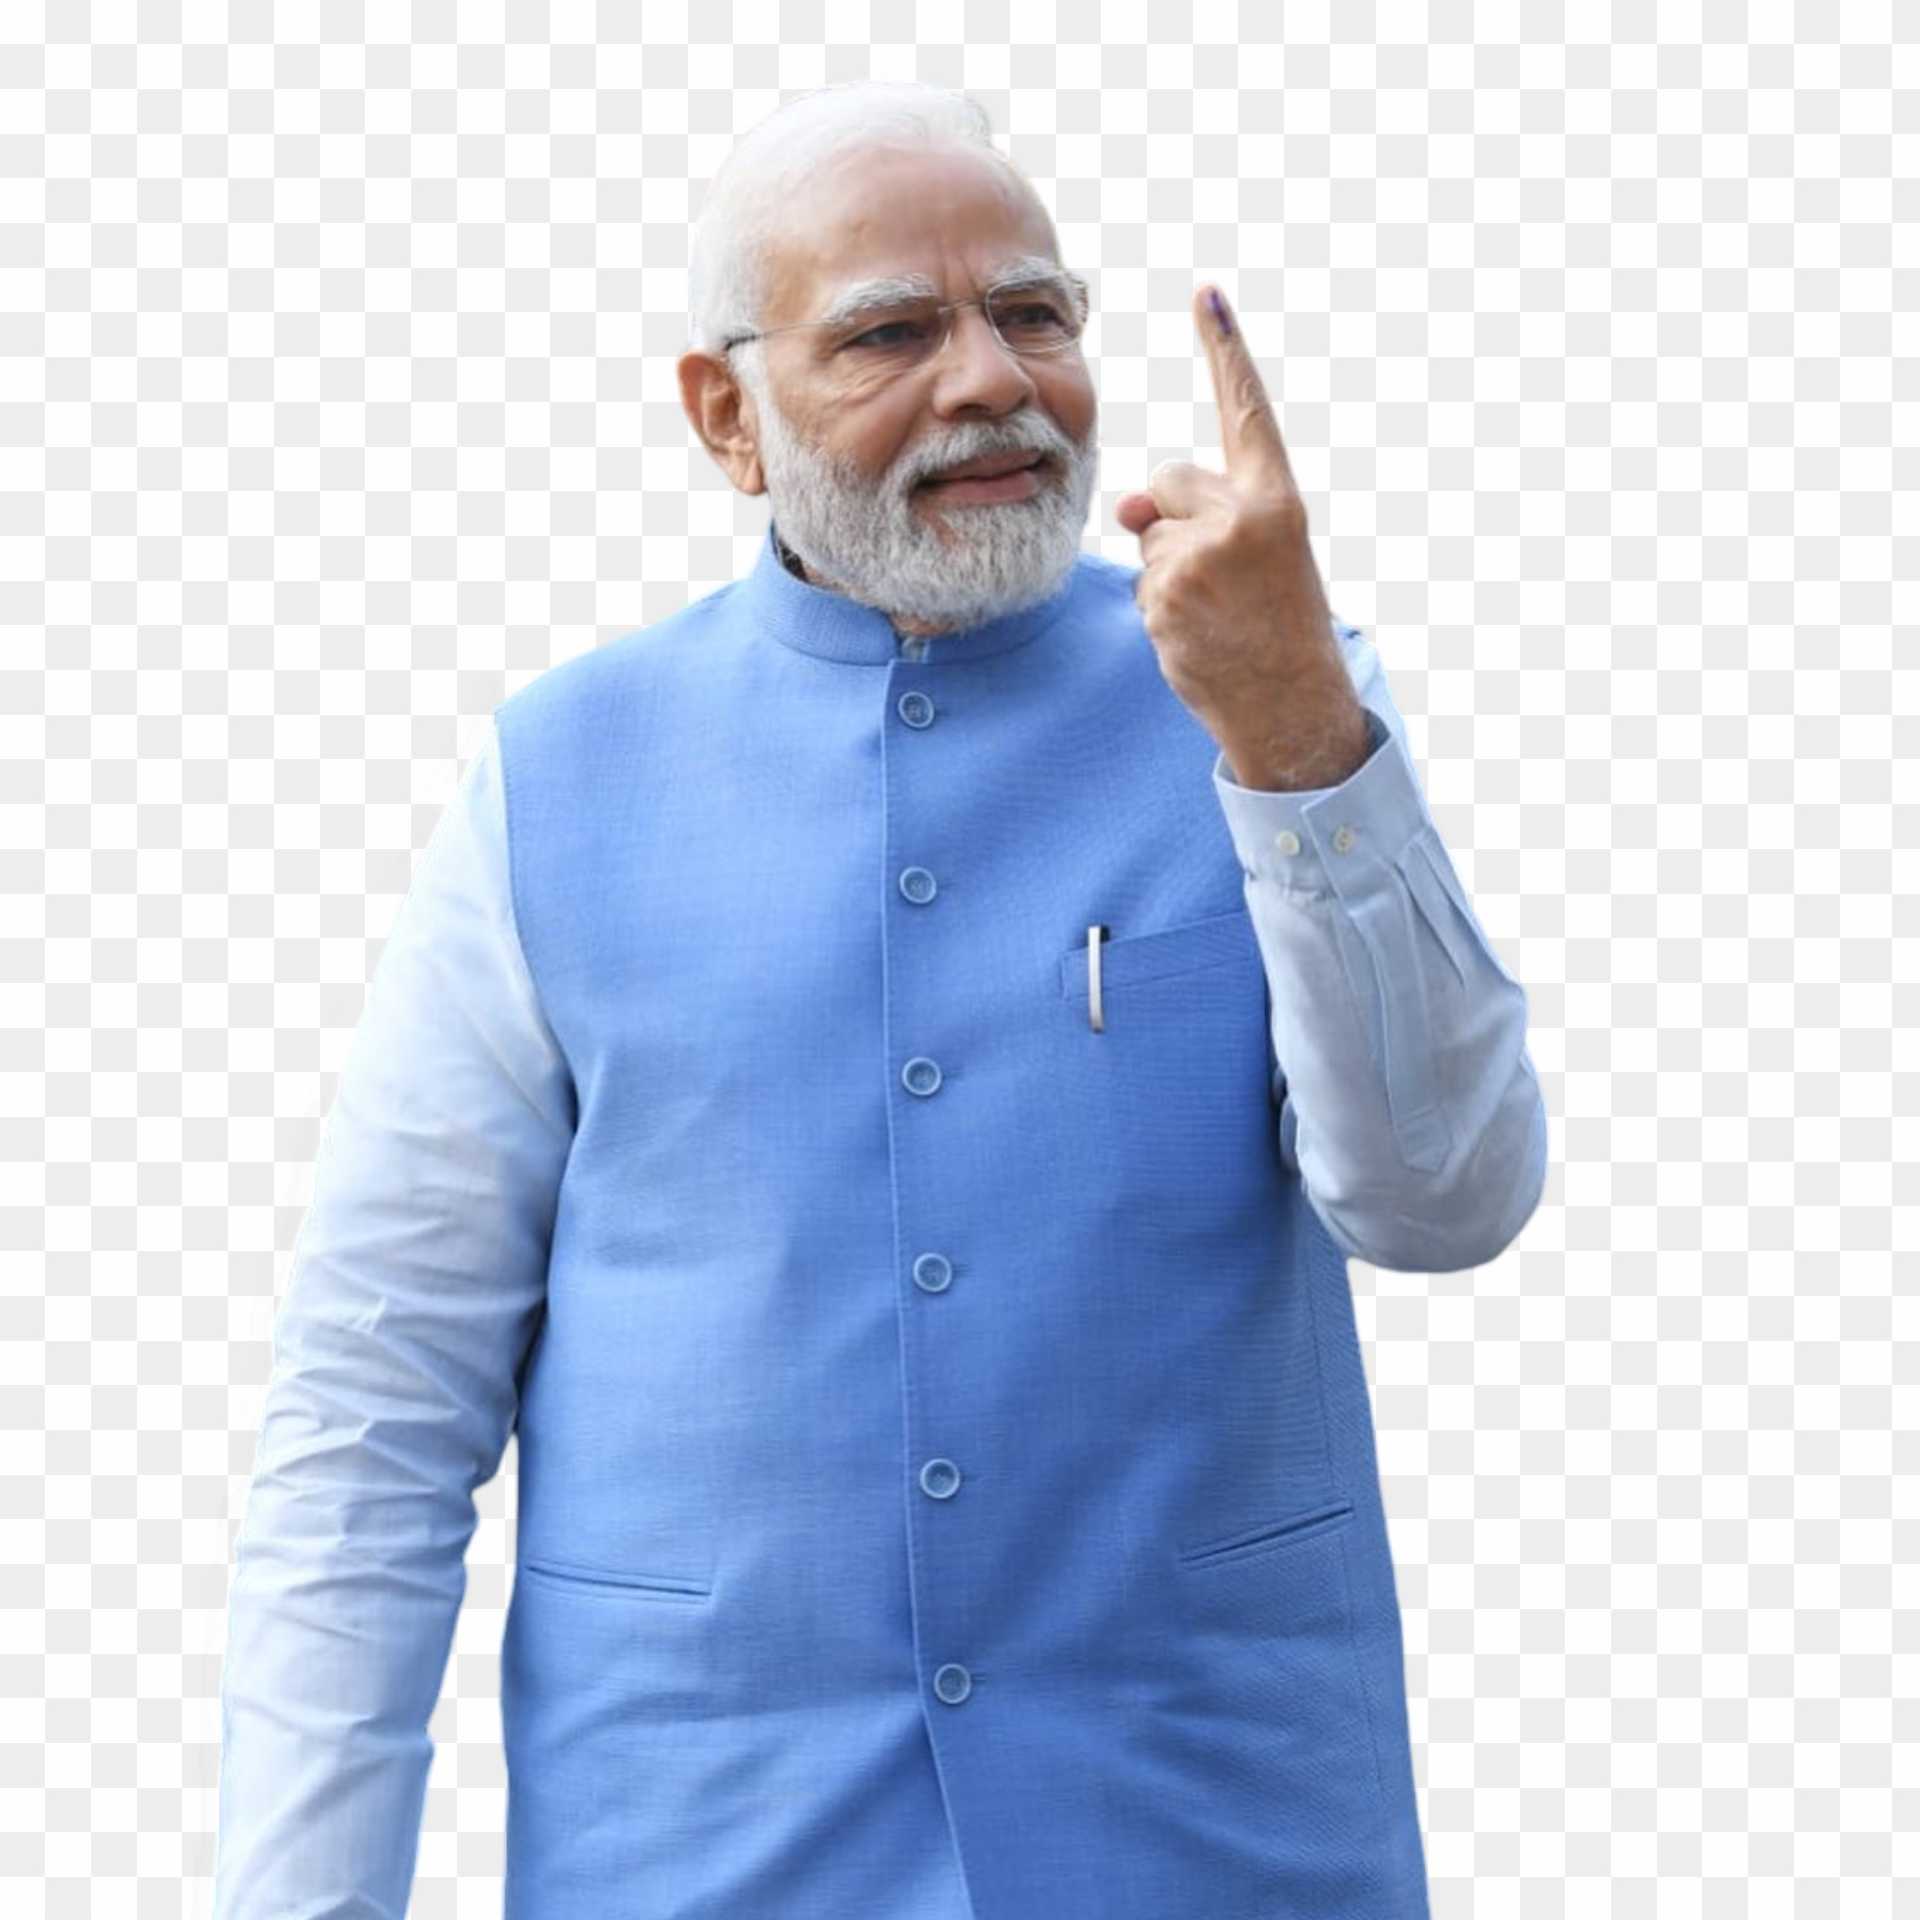 Prime Minister Narendra Modi free PNG HD images download